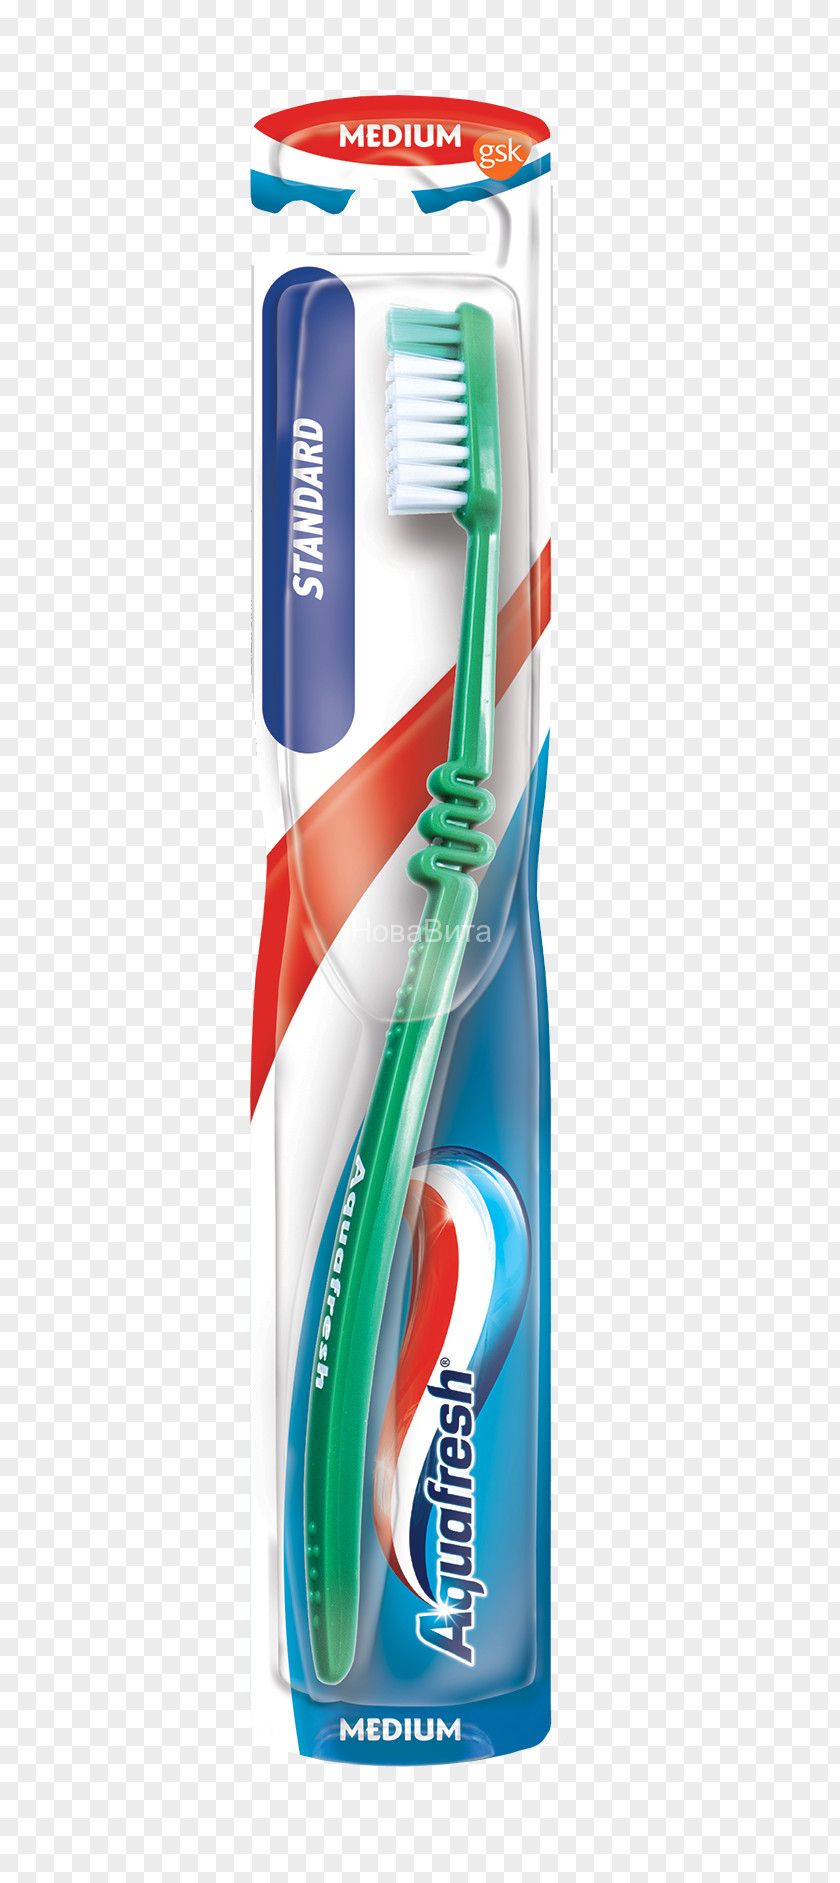 Toothbrush Aquafresh Dentistry PNG